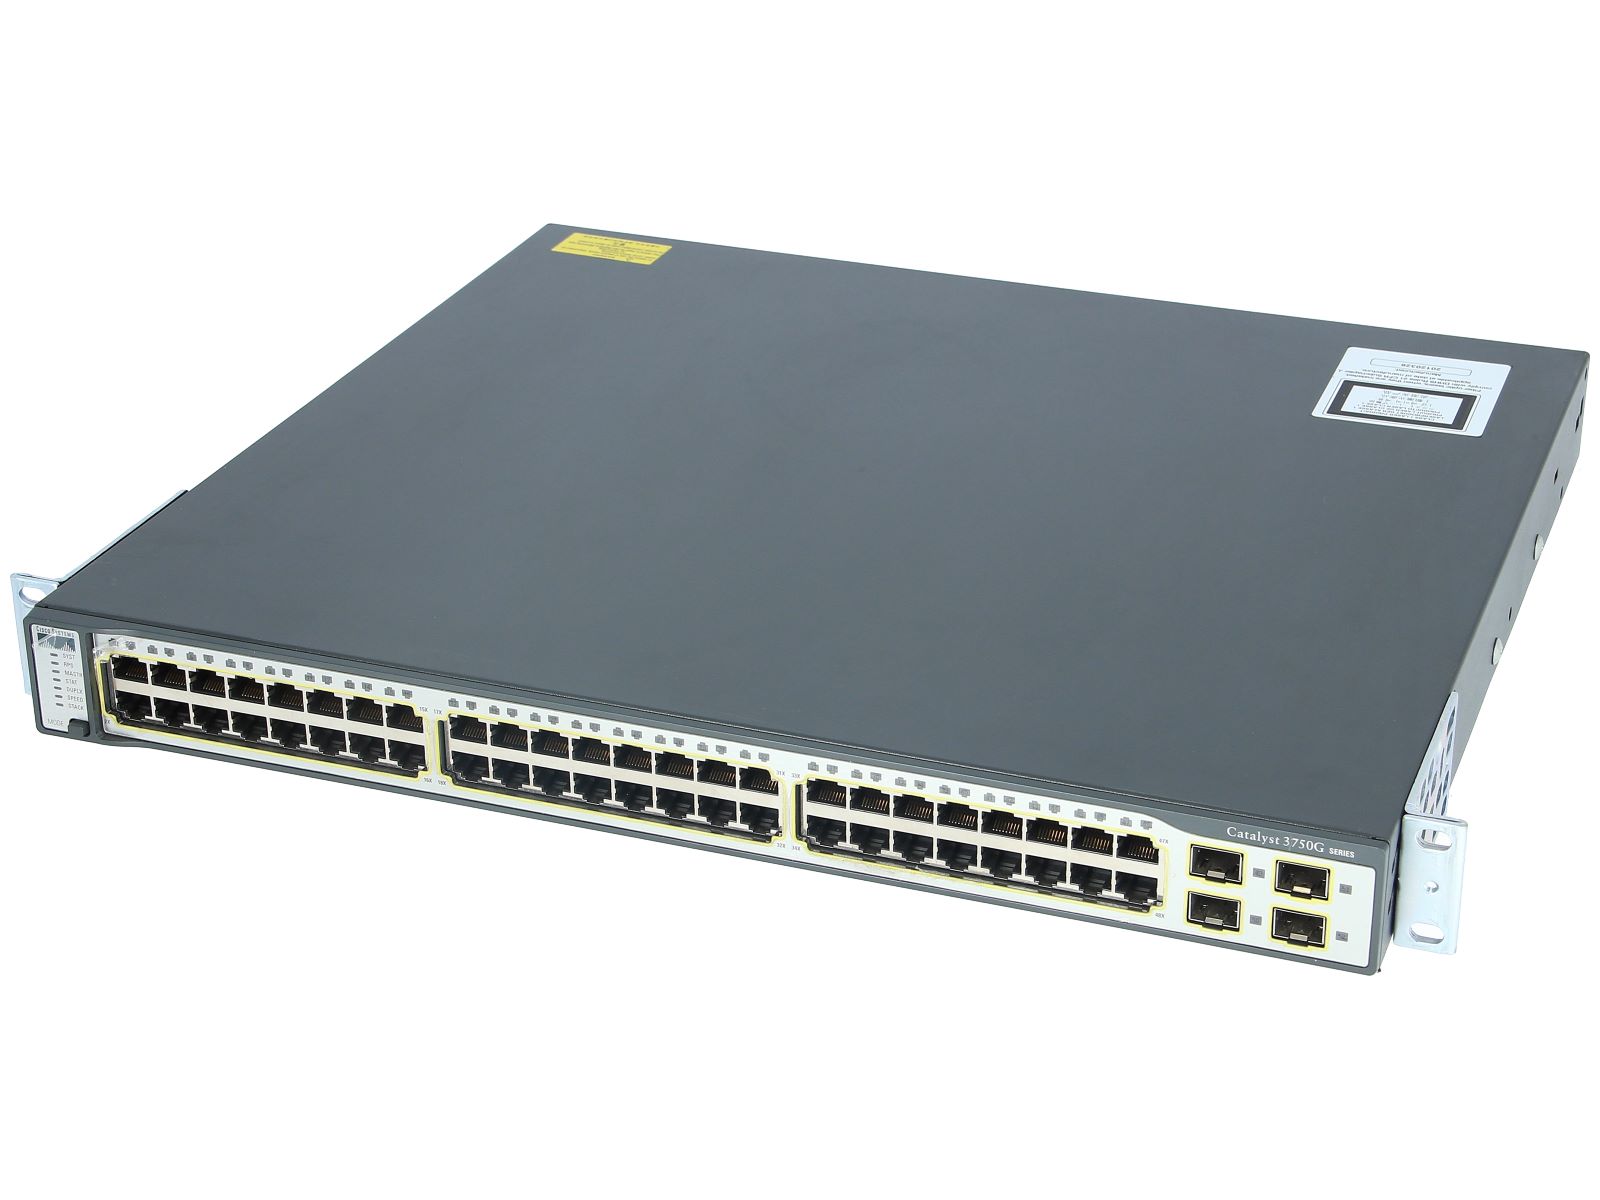 Коммутатор Cisco WS-C3750G-48TS-S